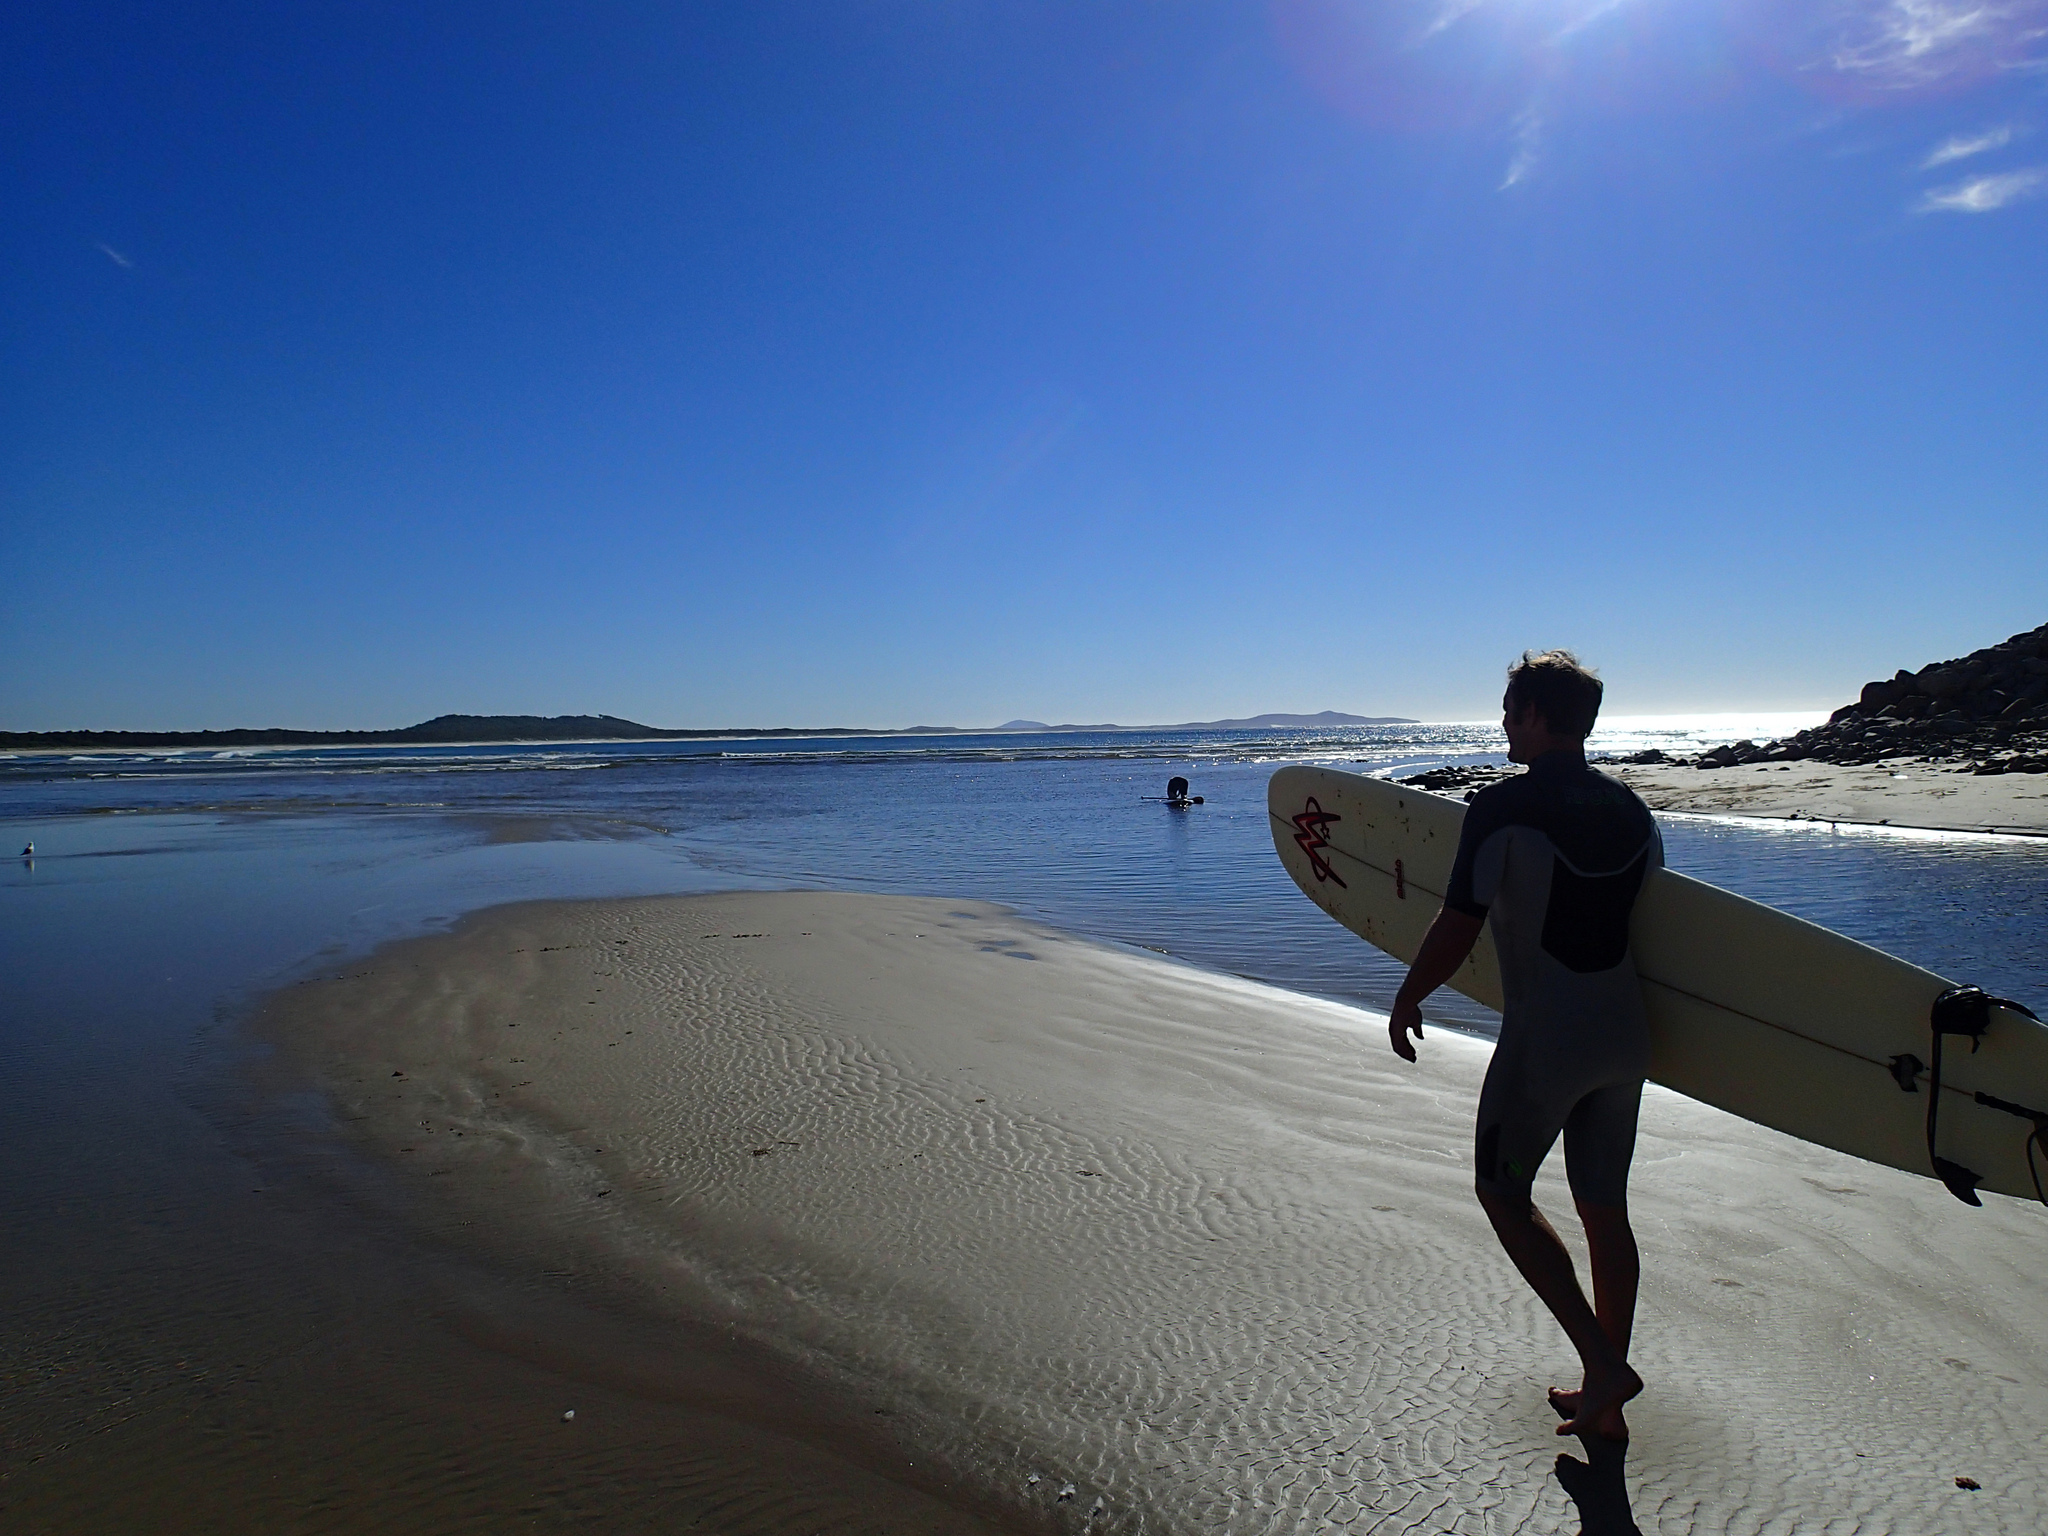 The Surfing Beaches Australia